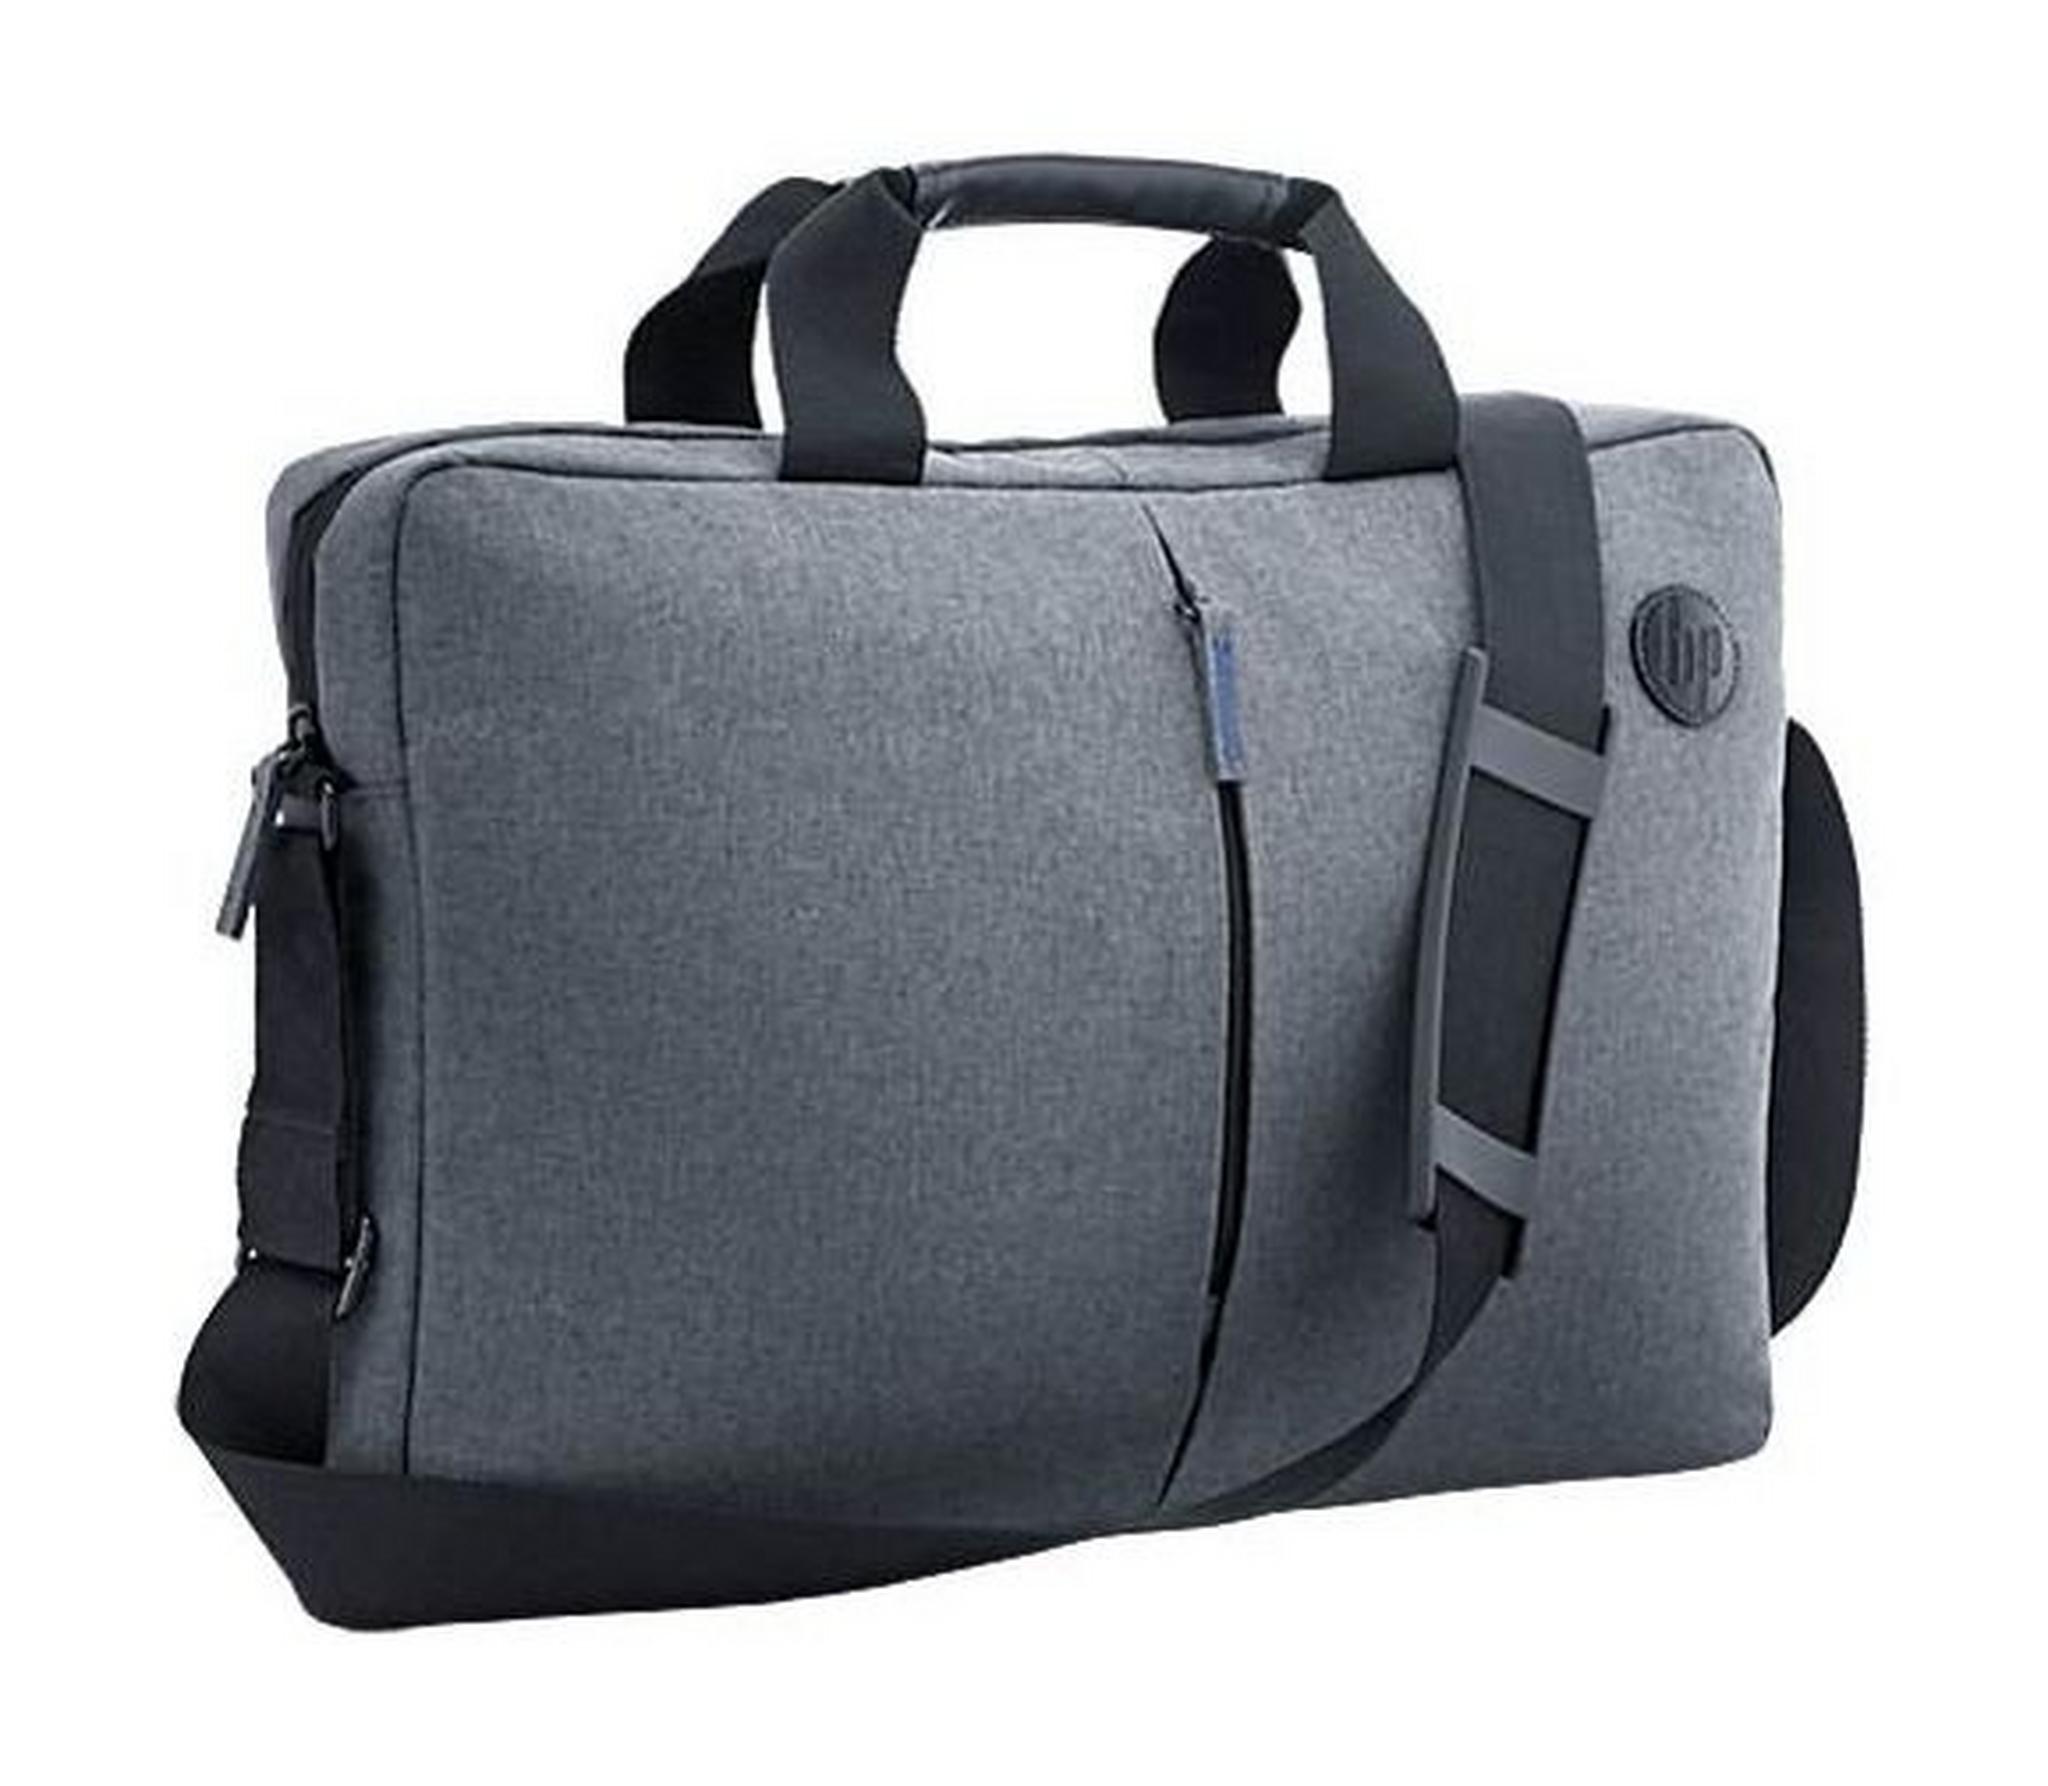 HP Essential TopLoader 15.6-inch Laptop Bag - Grey - K0B38AA